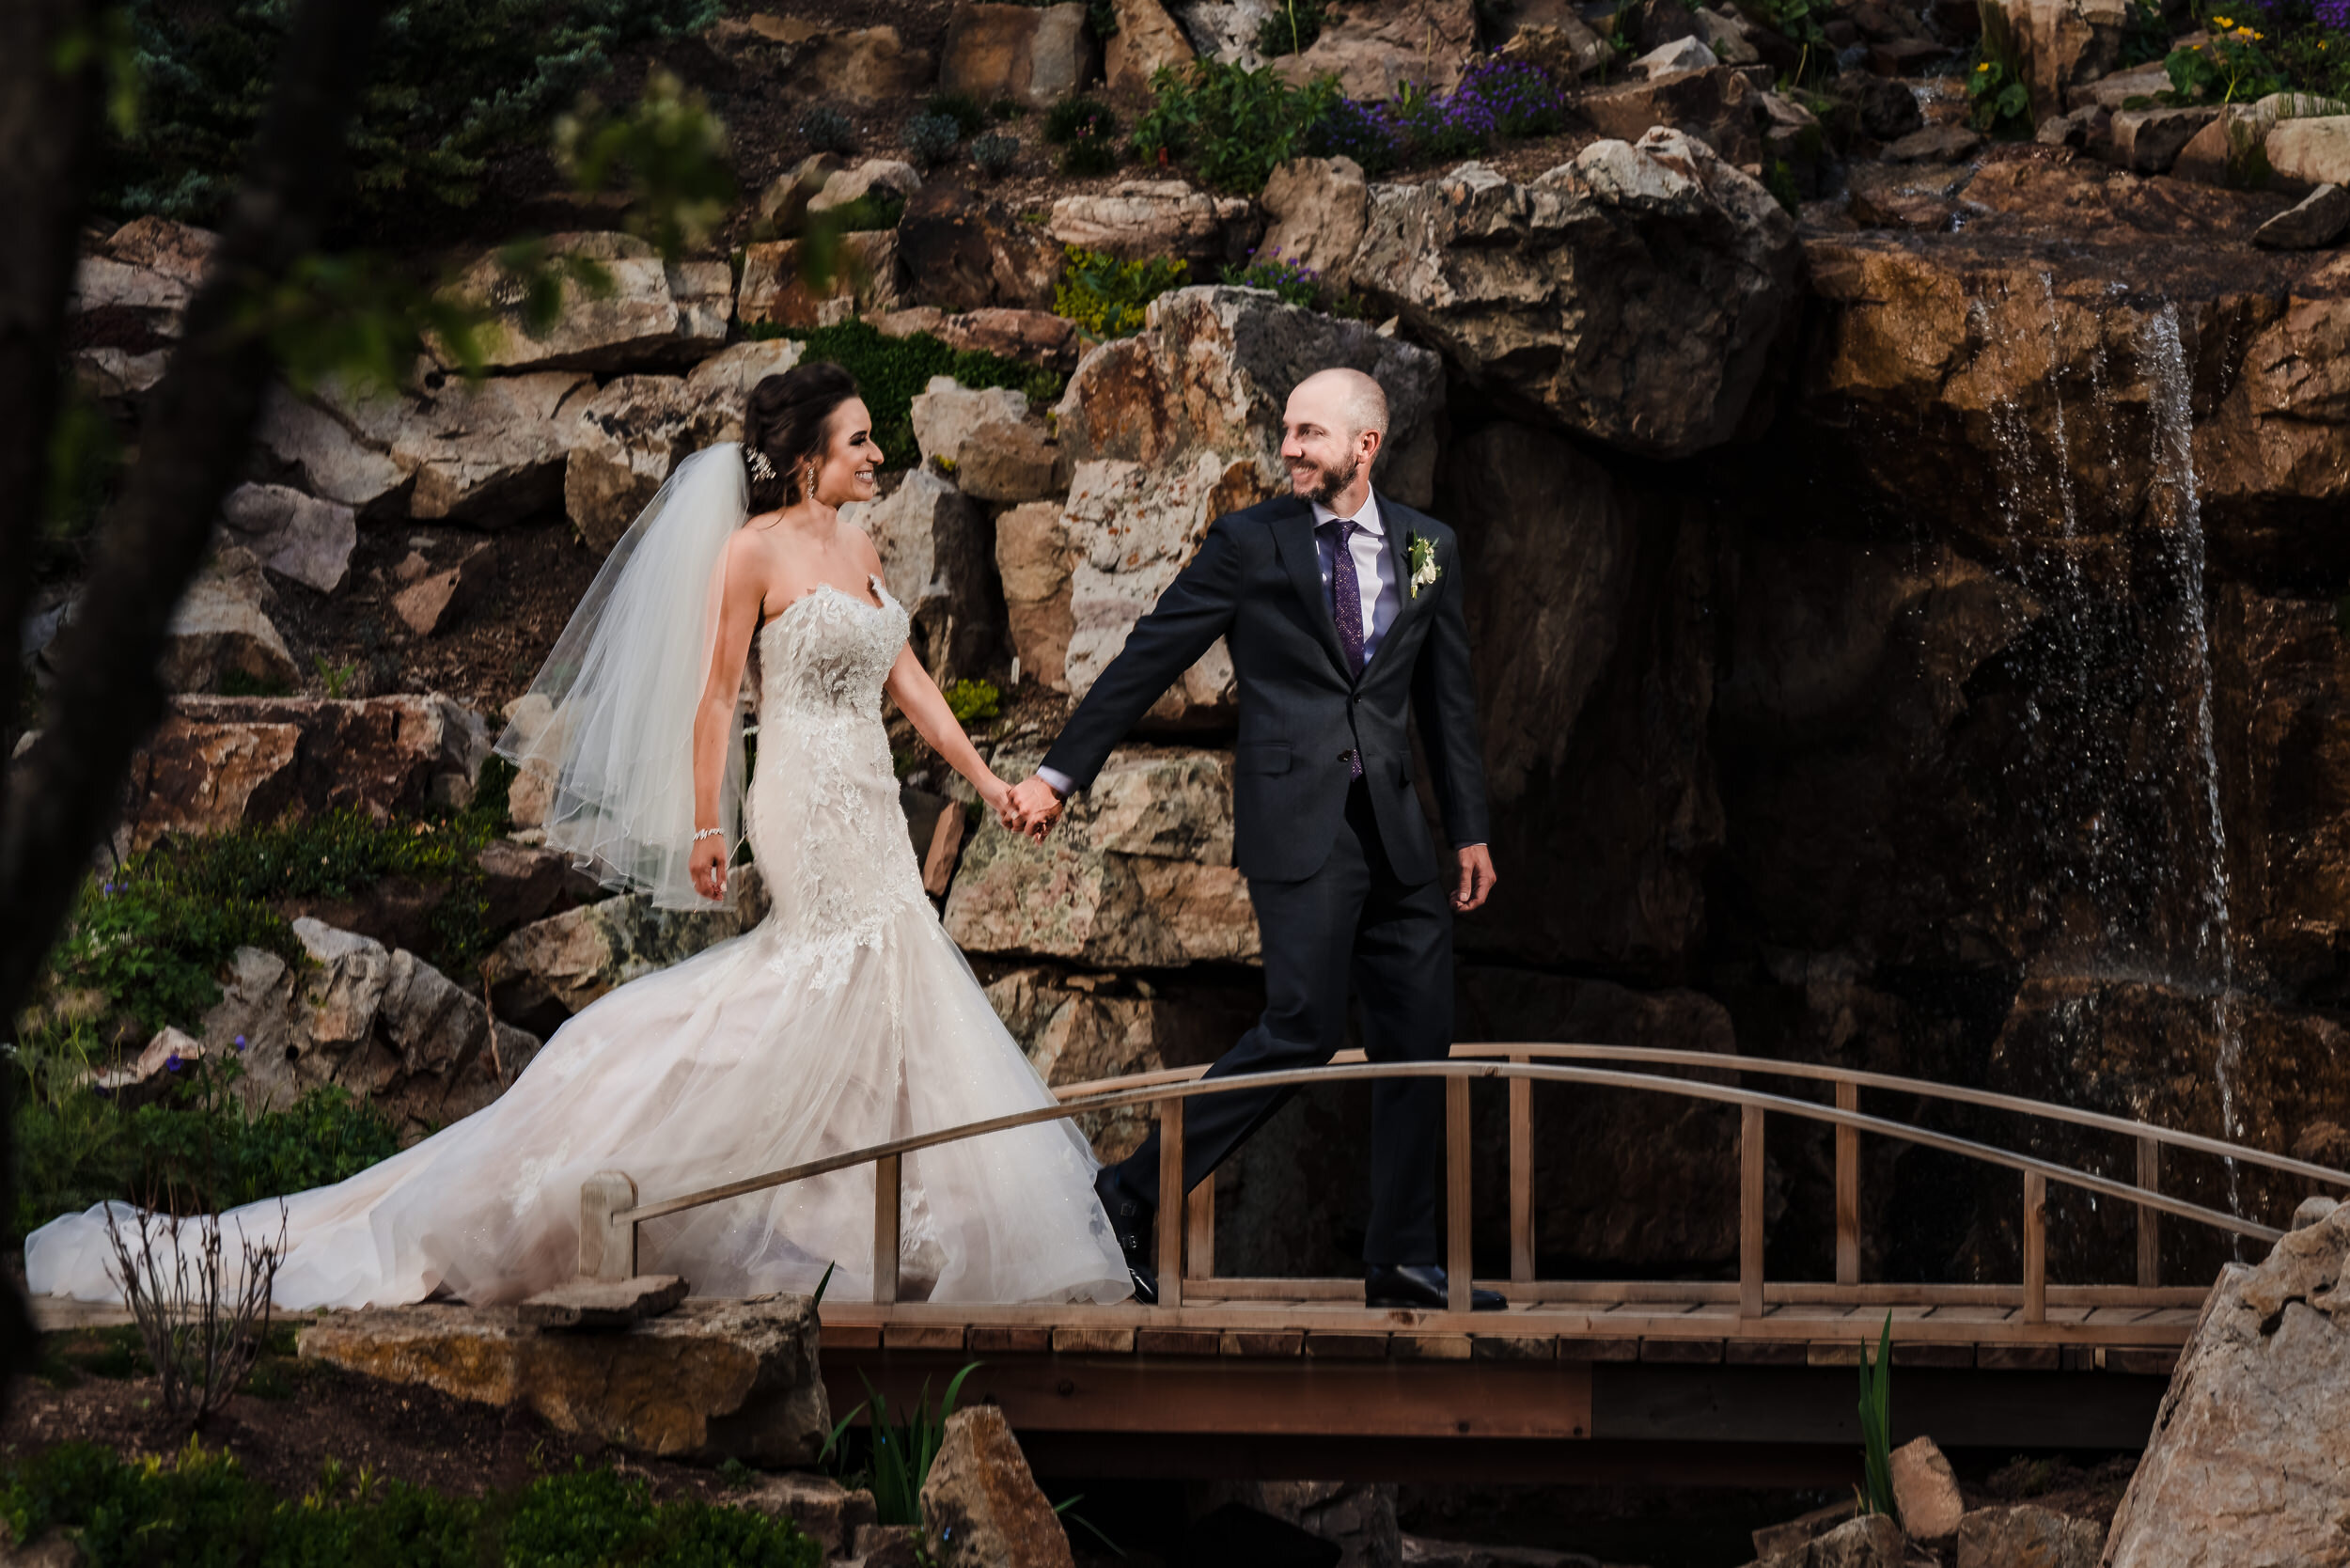  Four Seaason Resort wedding by Vail Colorado photographer, JMGant Photography 